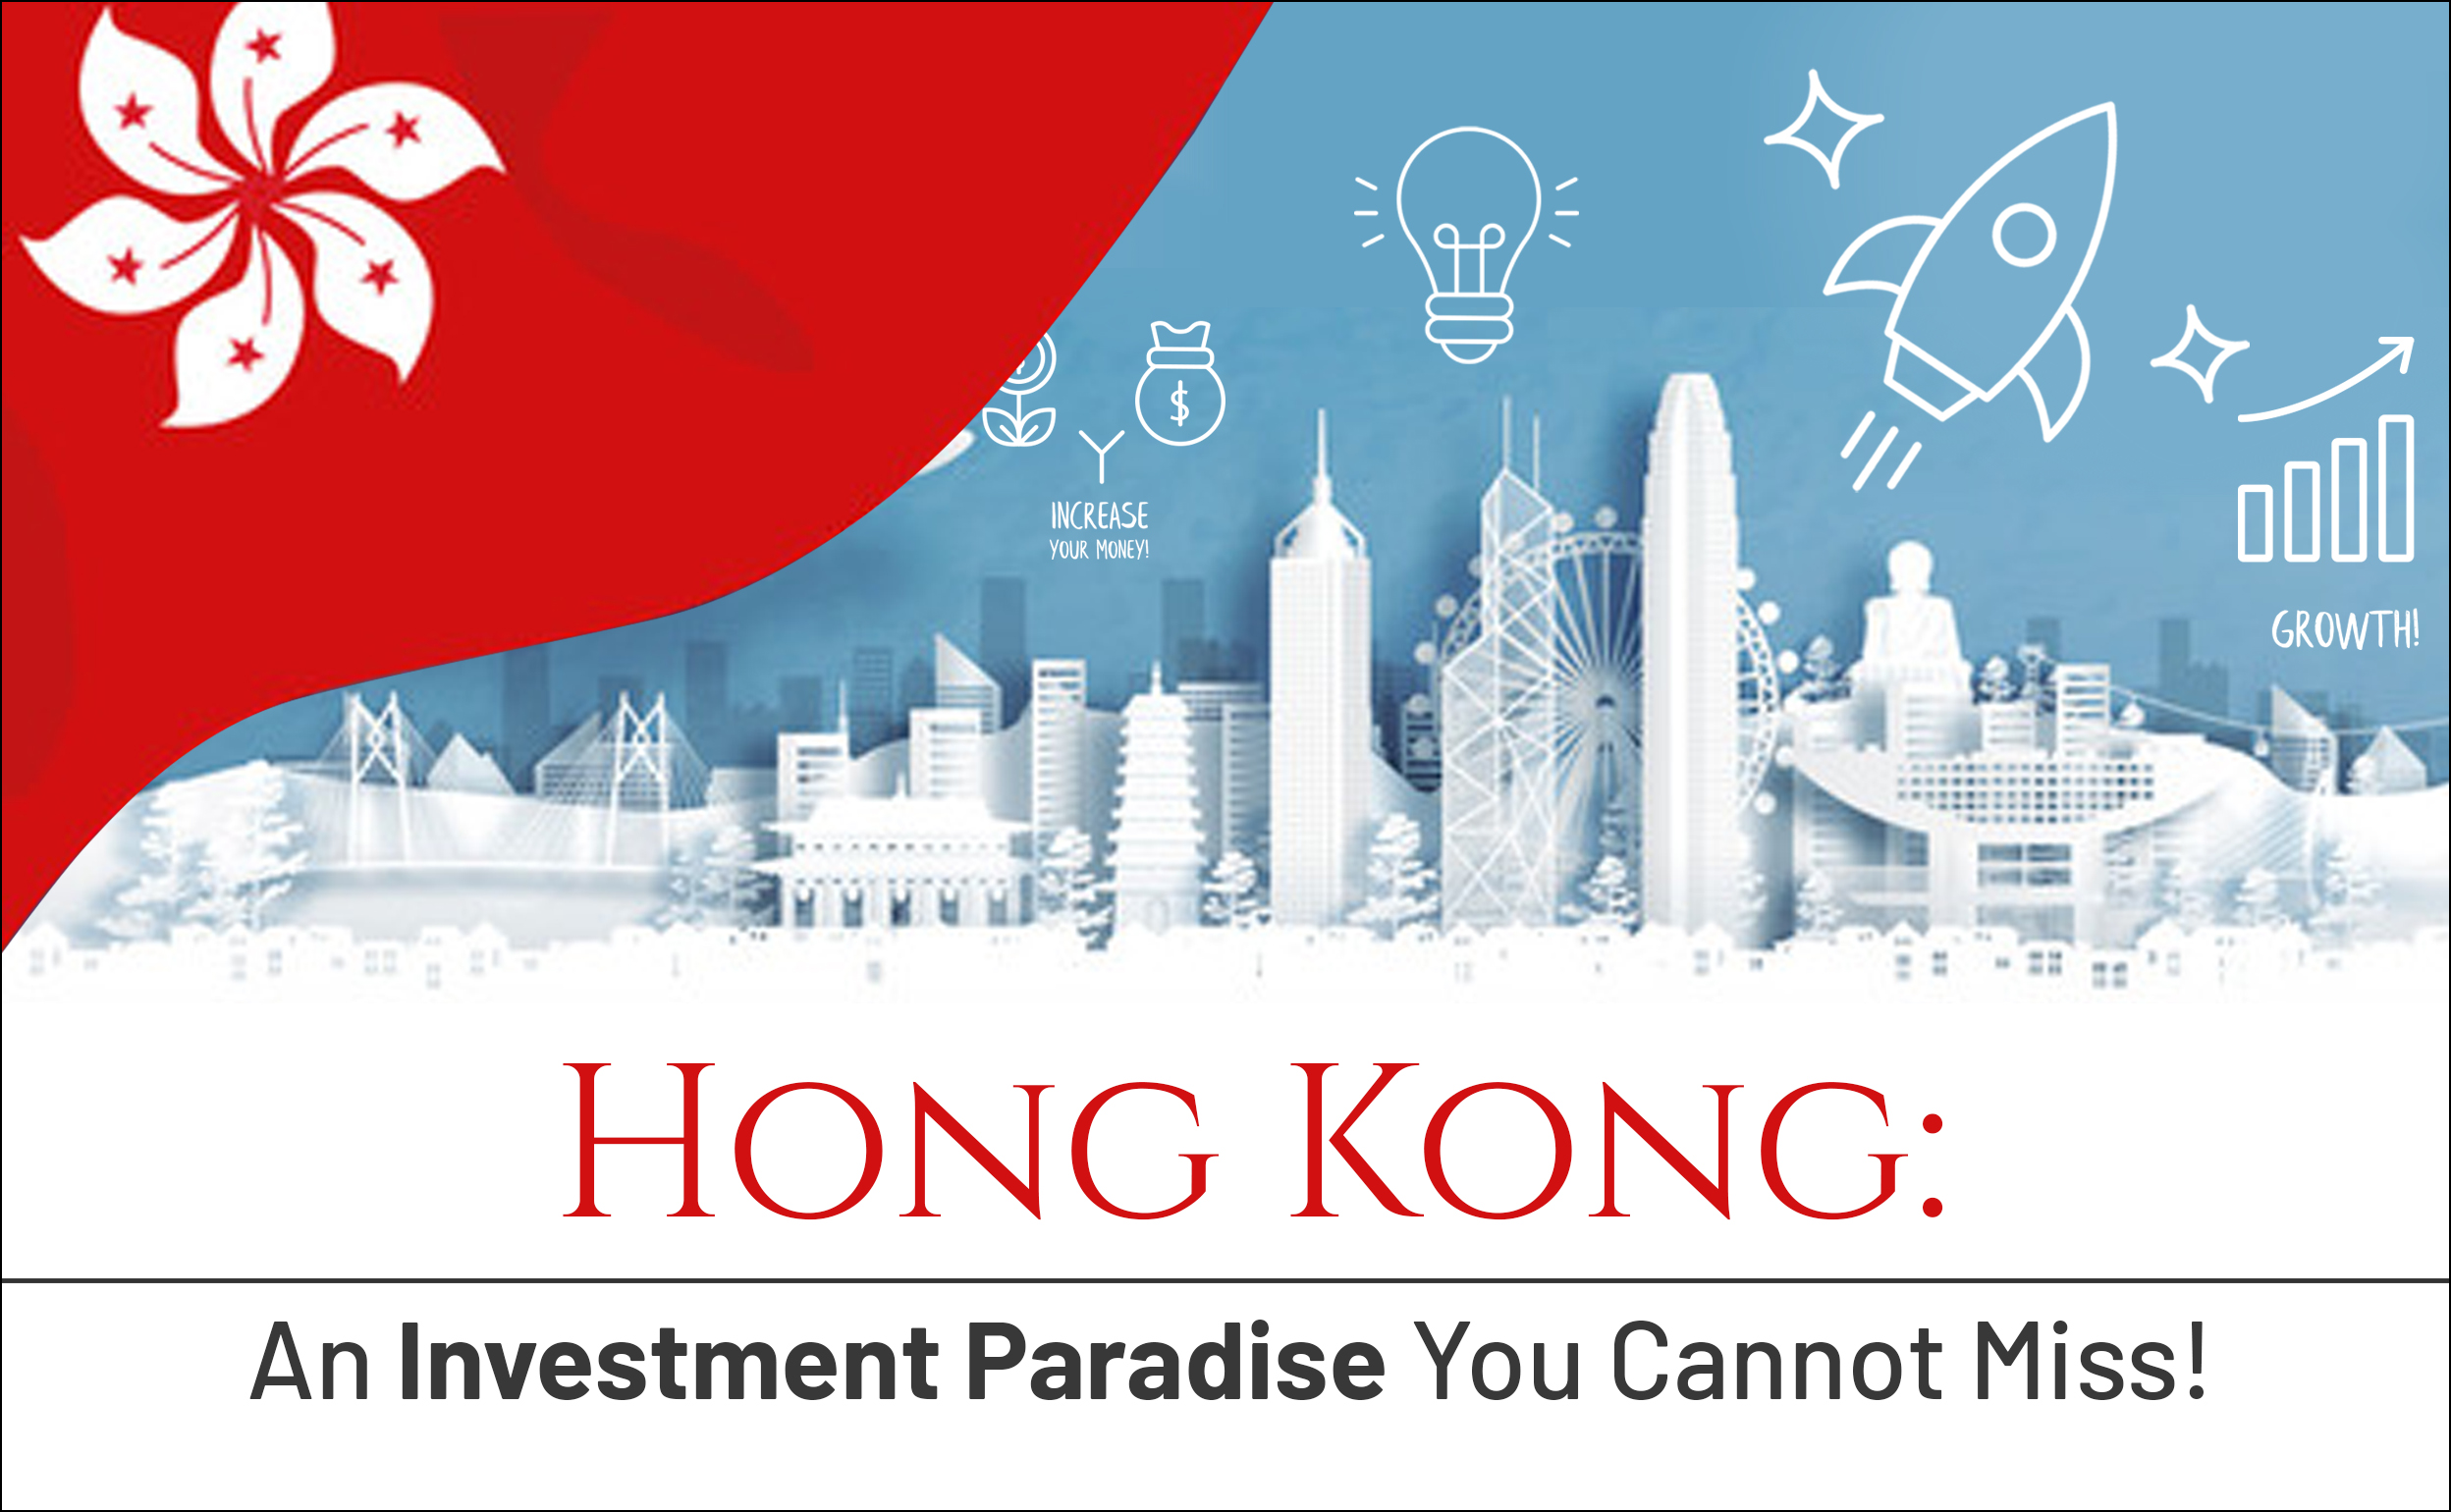 Hong Kong: An Investment Paradise